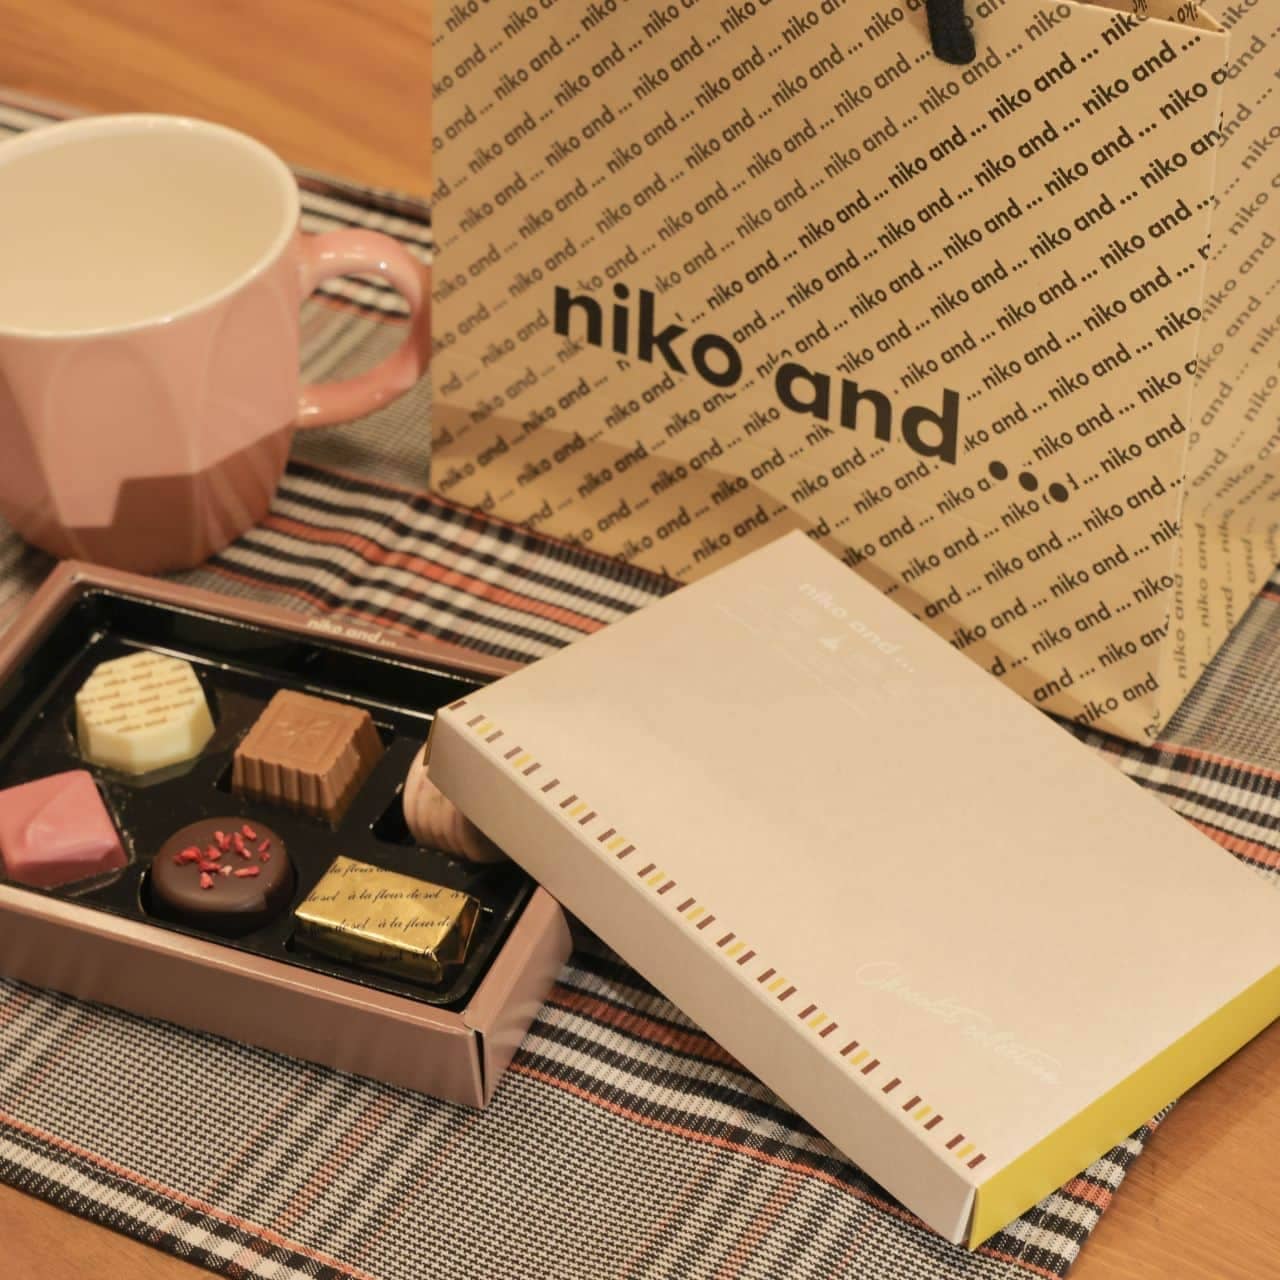 FamilyMart "Nicoand Gift Chocolates 6".